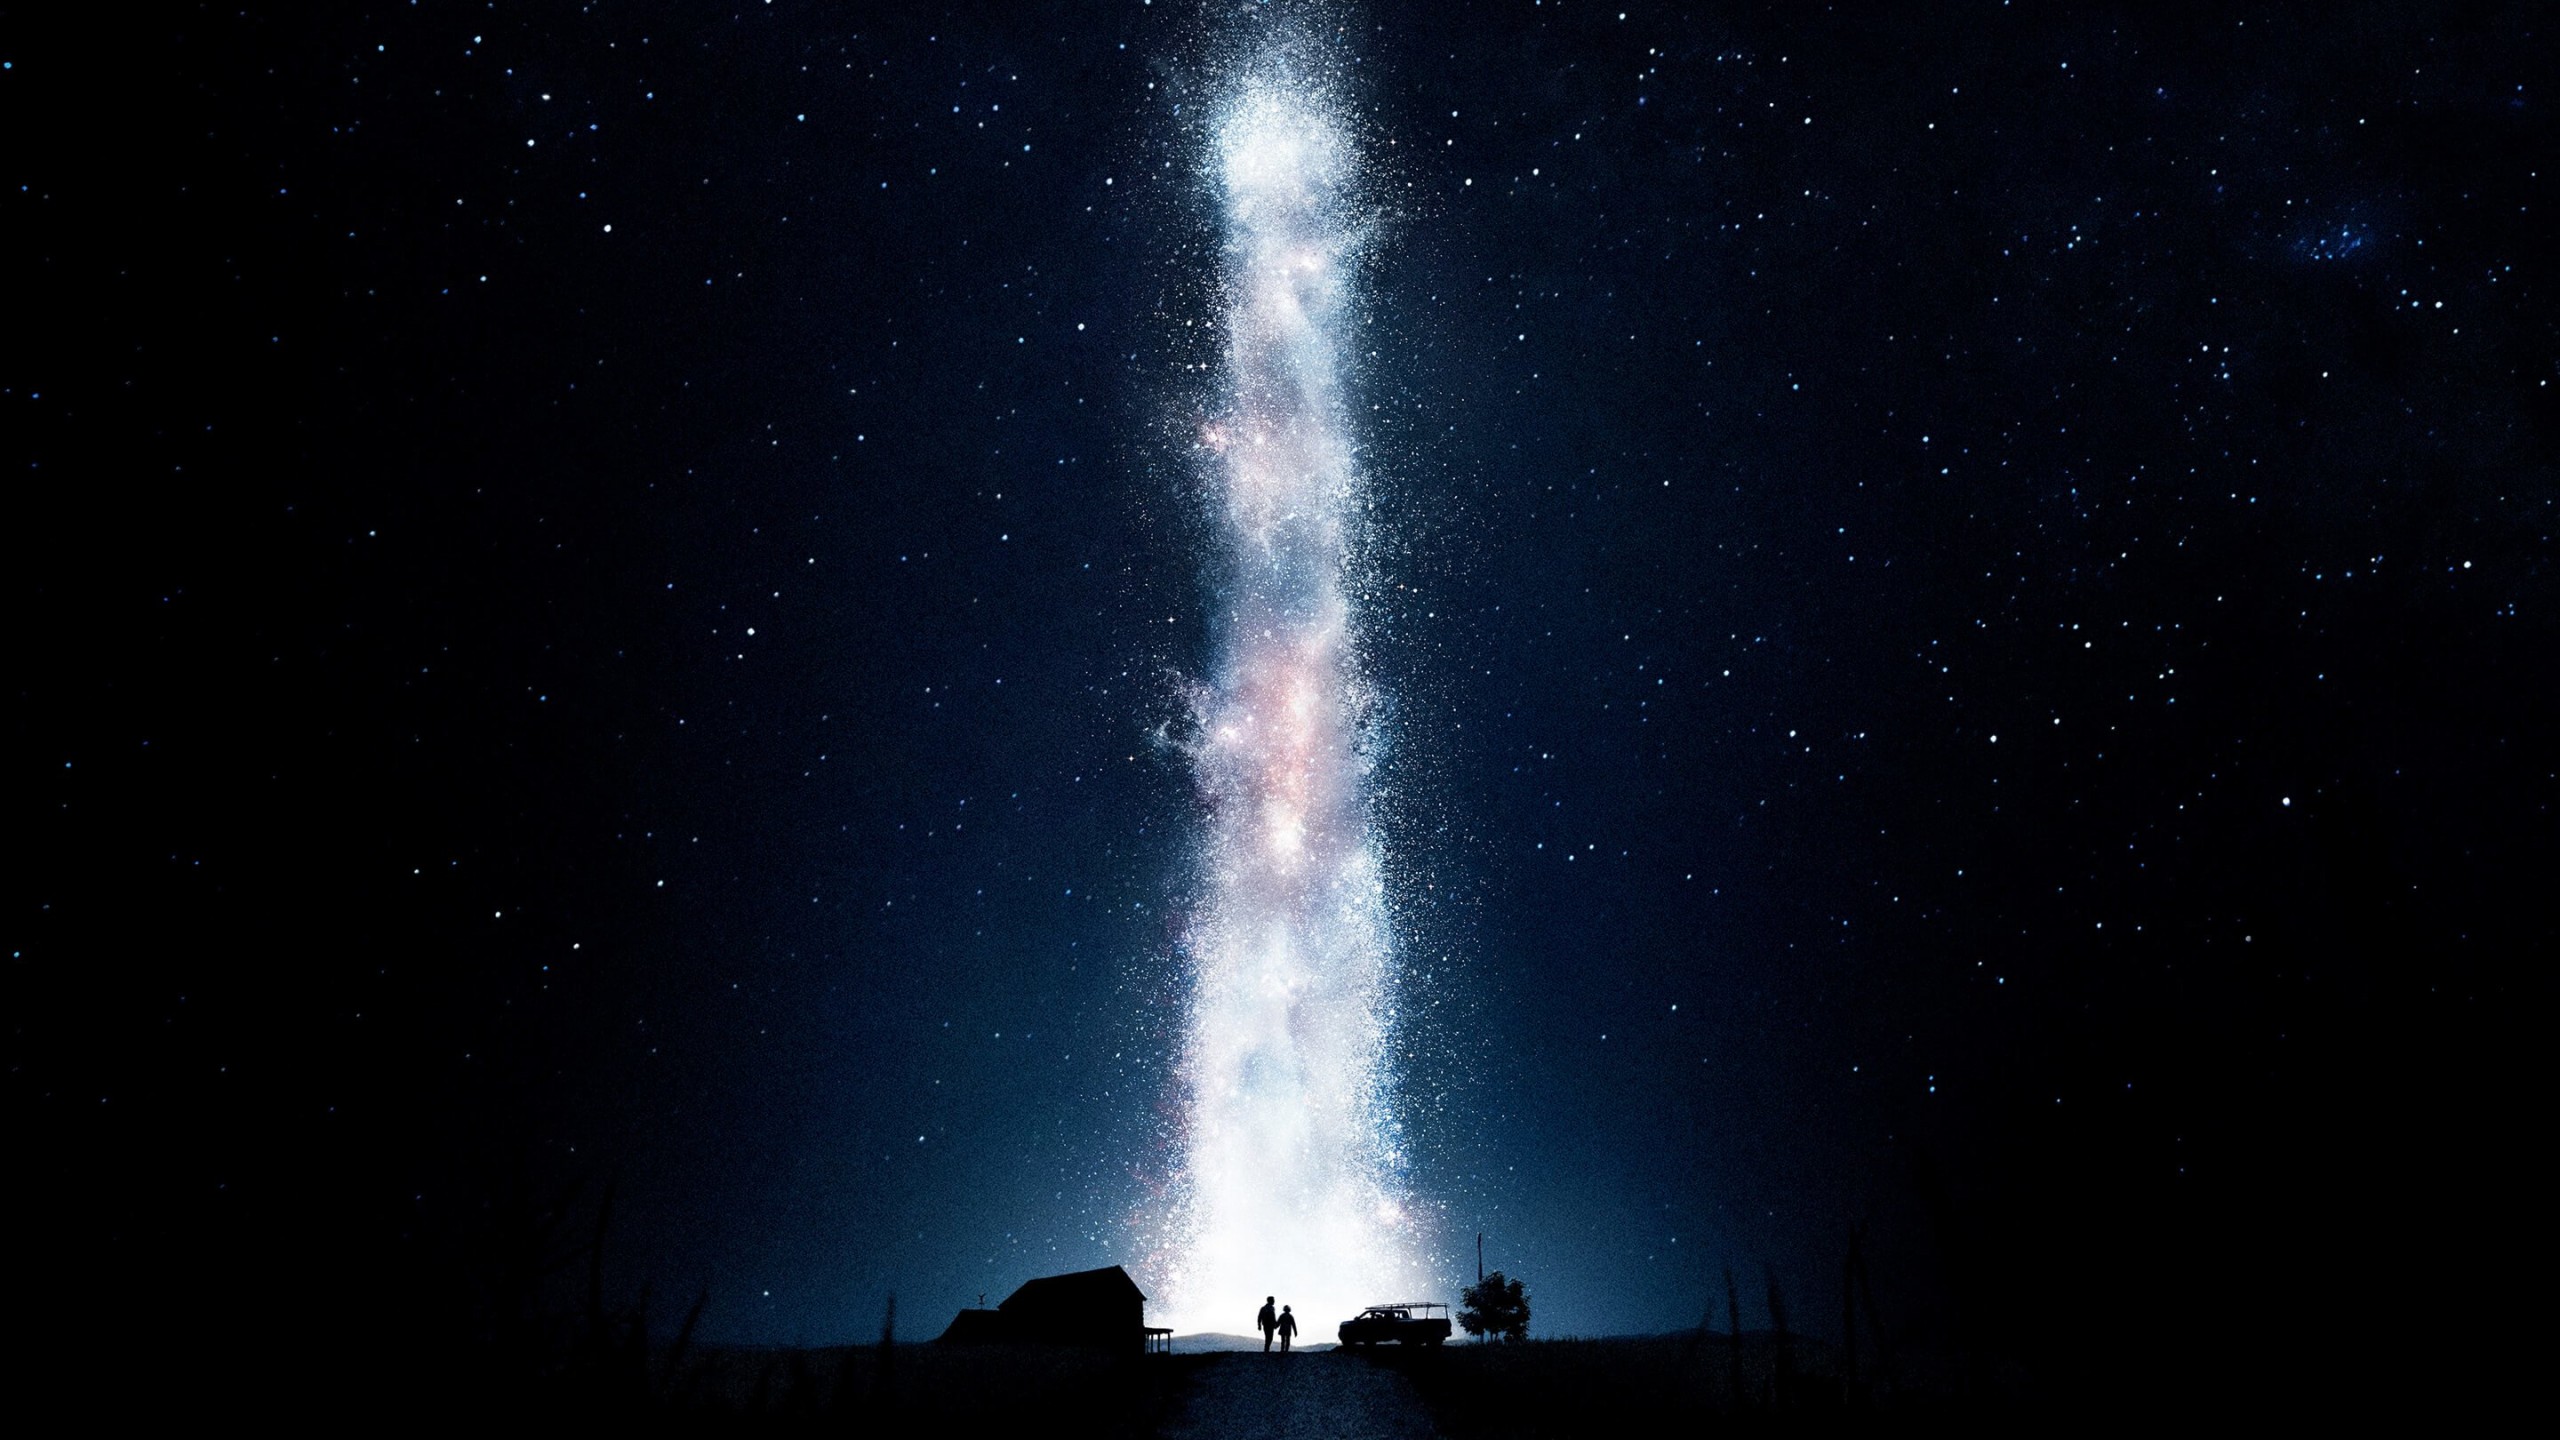 Interstellar (2014) Wallpaper for Desktop 2560x1440